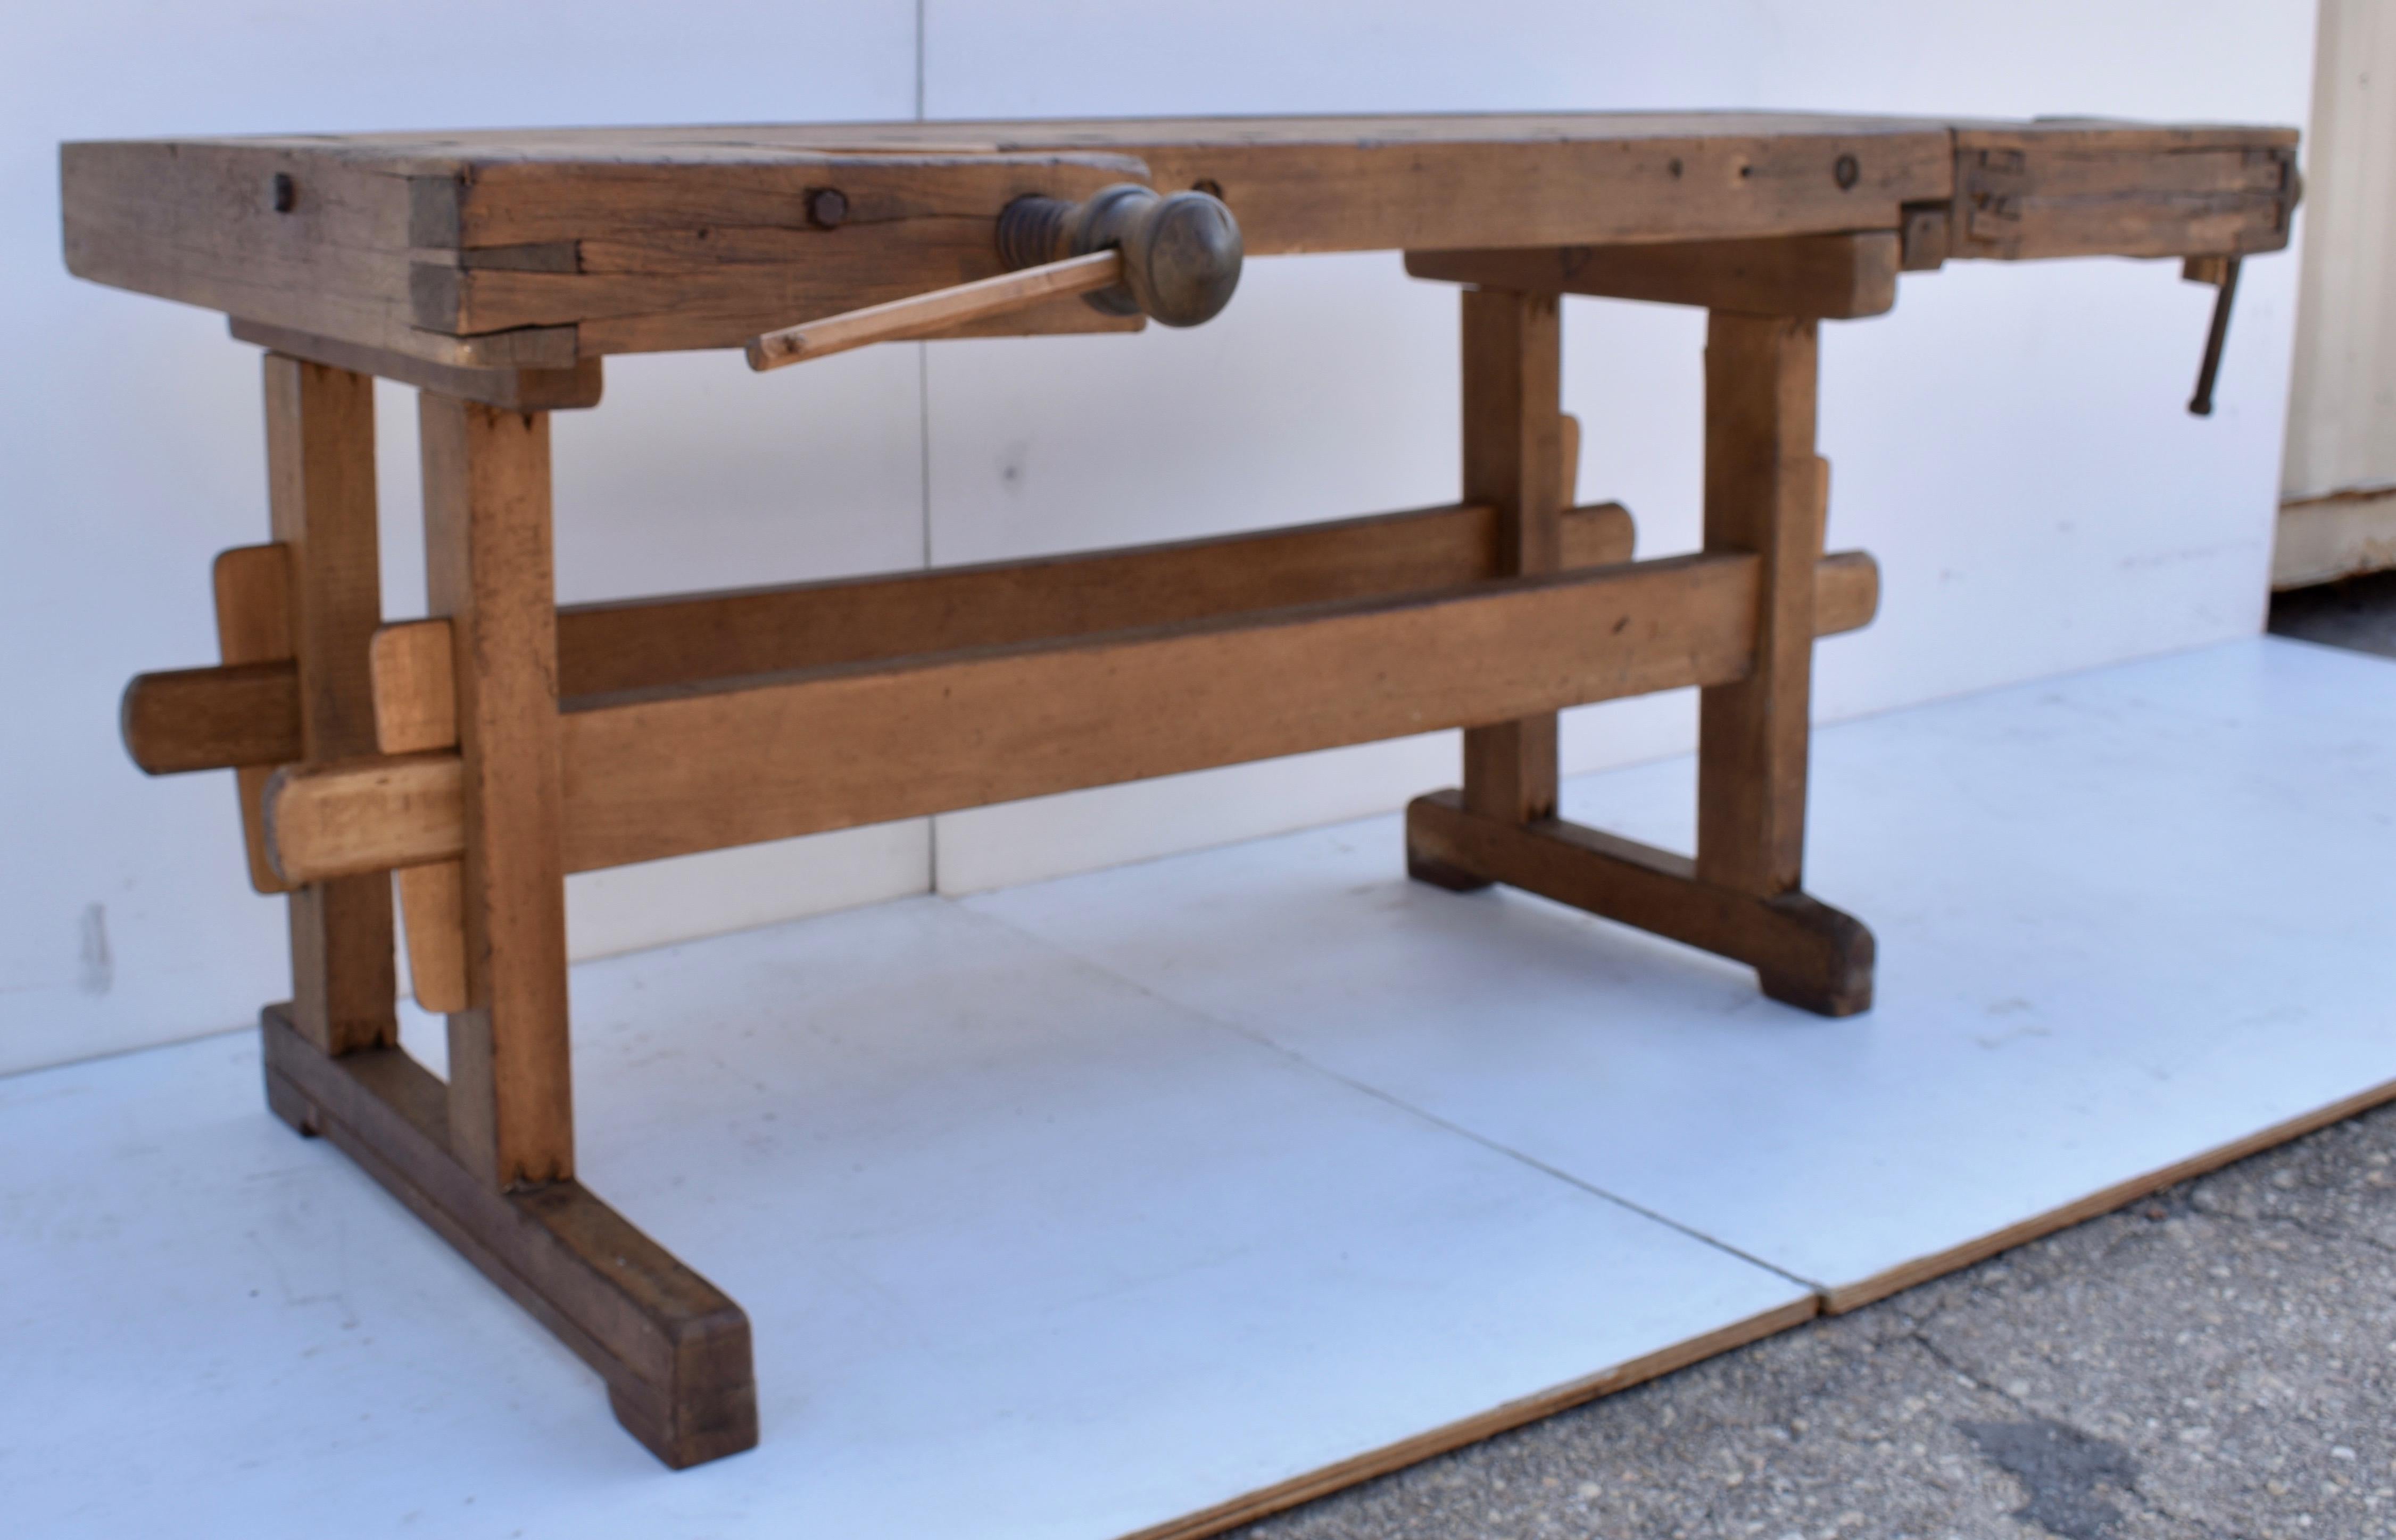 carpenter's bench